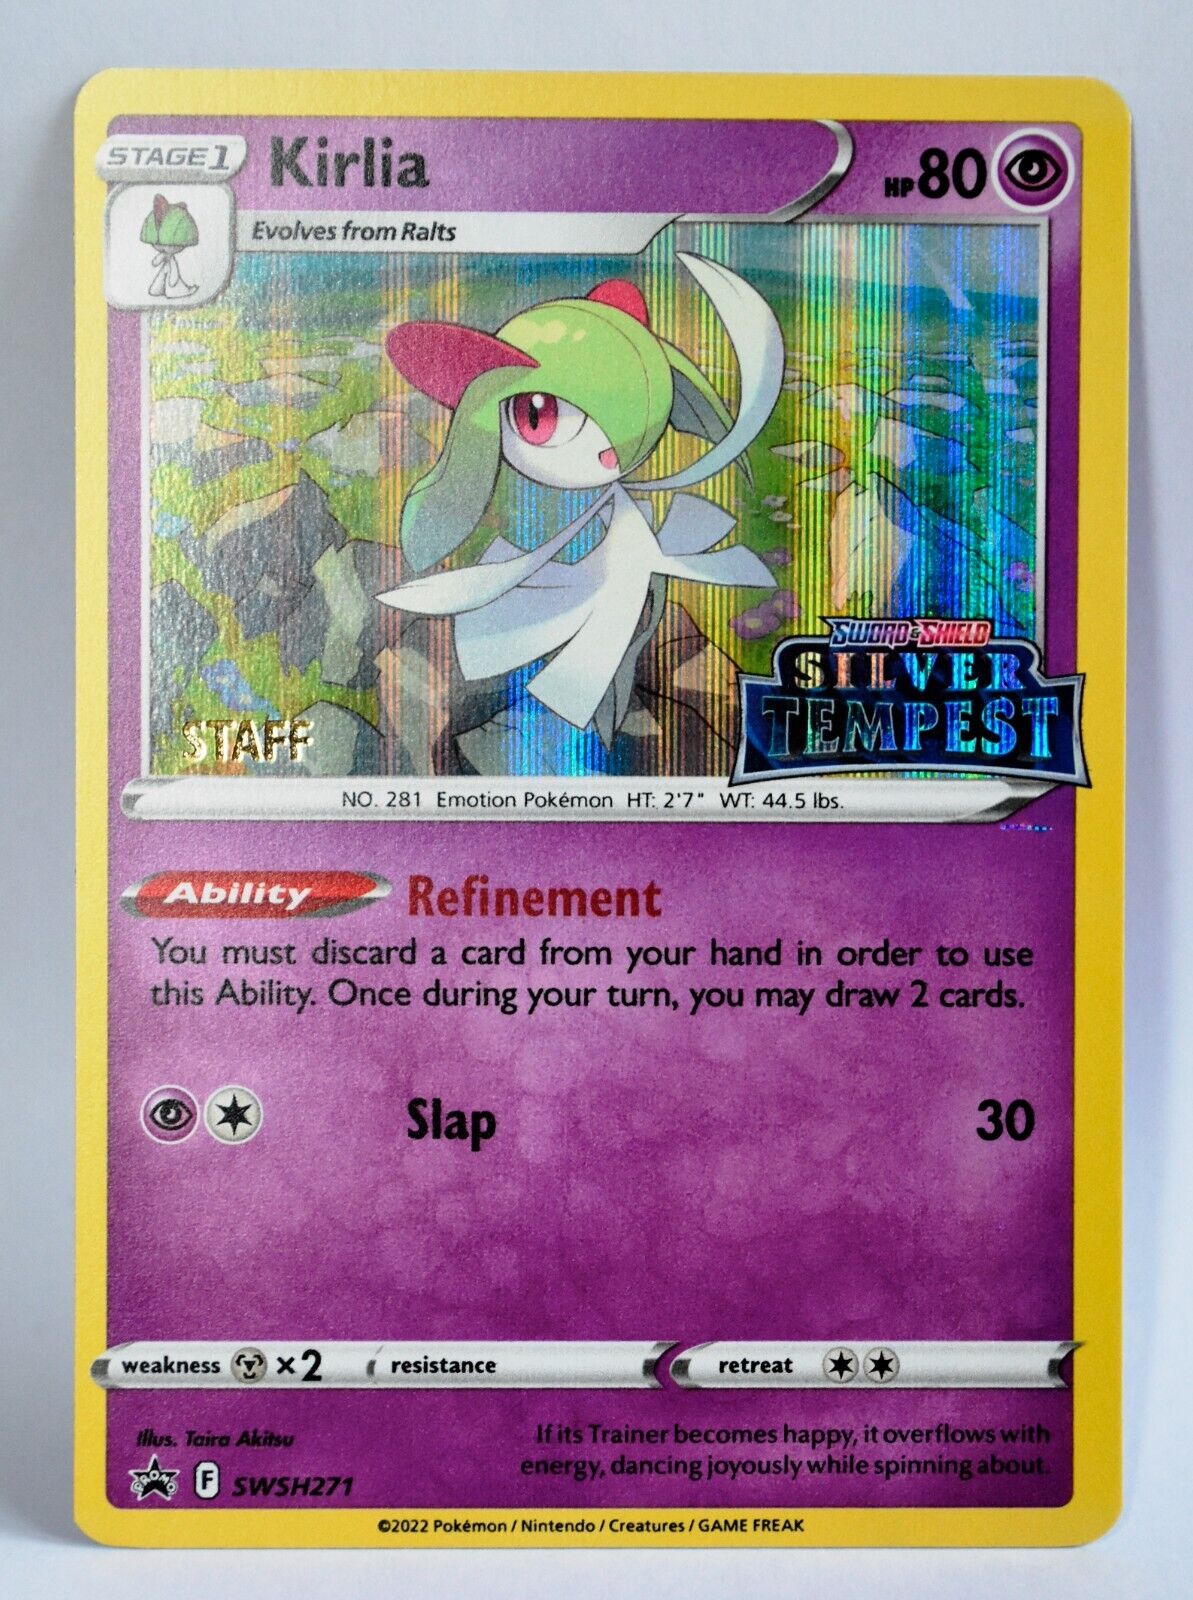 Pokémon TCG Pre-release Promo Silver Tempest Kirlia SWSH271 STAFF Card